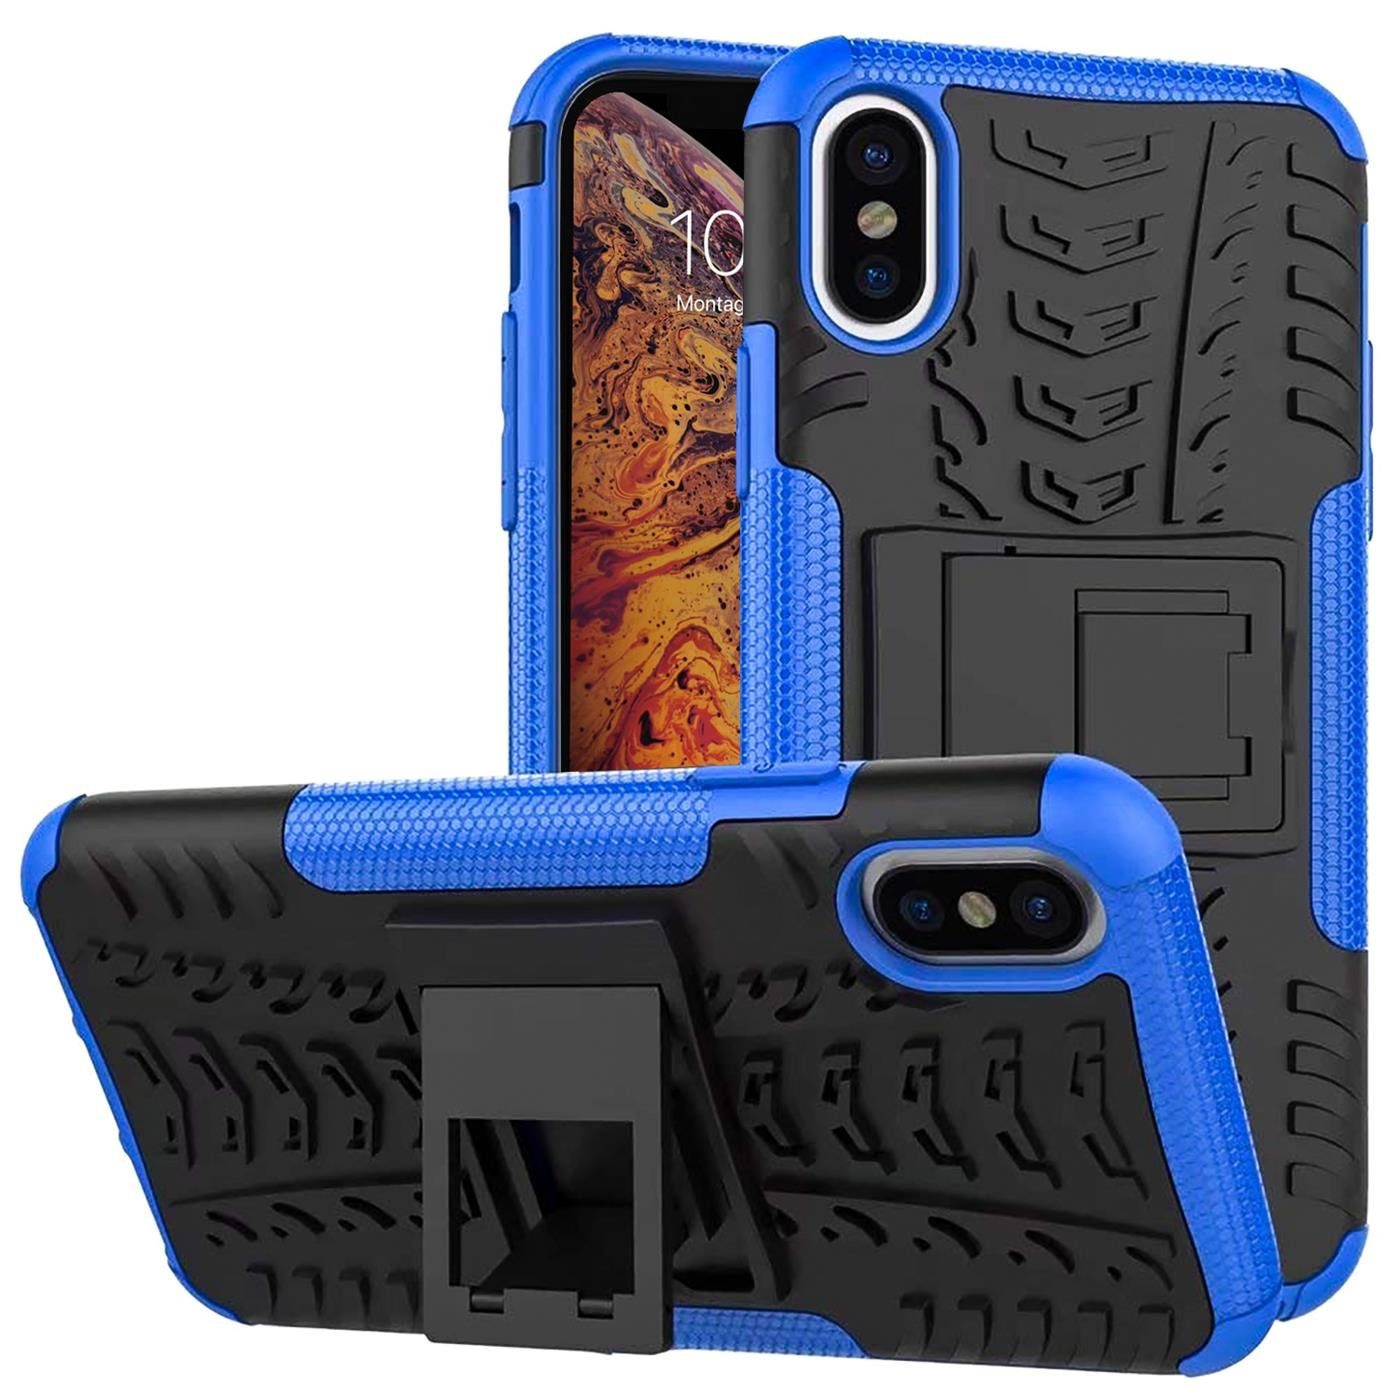 CoolGadget Handyhülle Outdoor Case Hybrid Cover für Apple iPhone X / XS 5,8  Zoll, Schutzhülle extrem robust Handy Case für iPhone X, iPhone XS Hülle